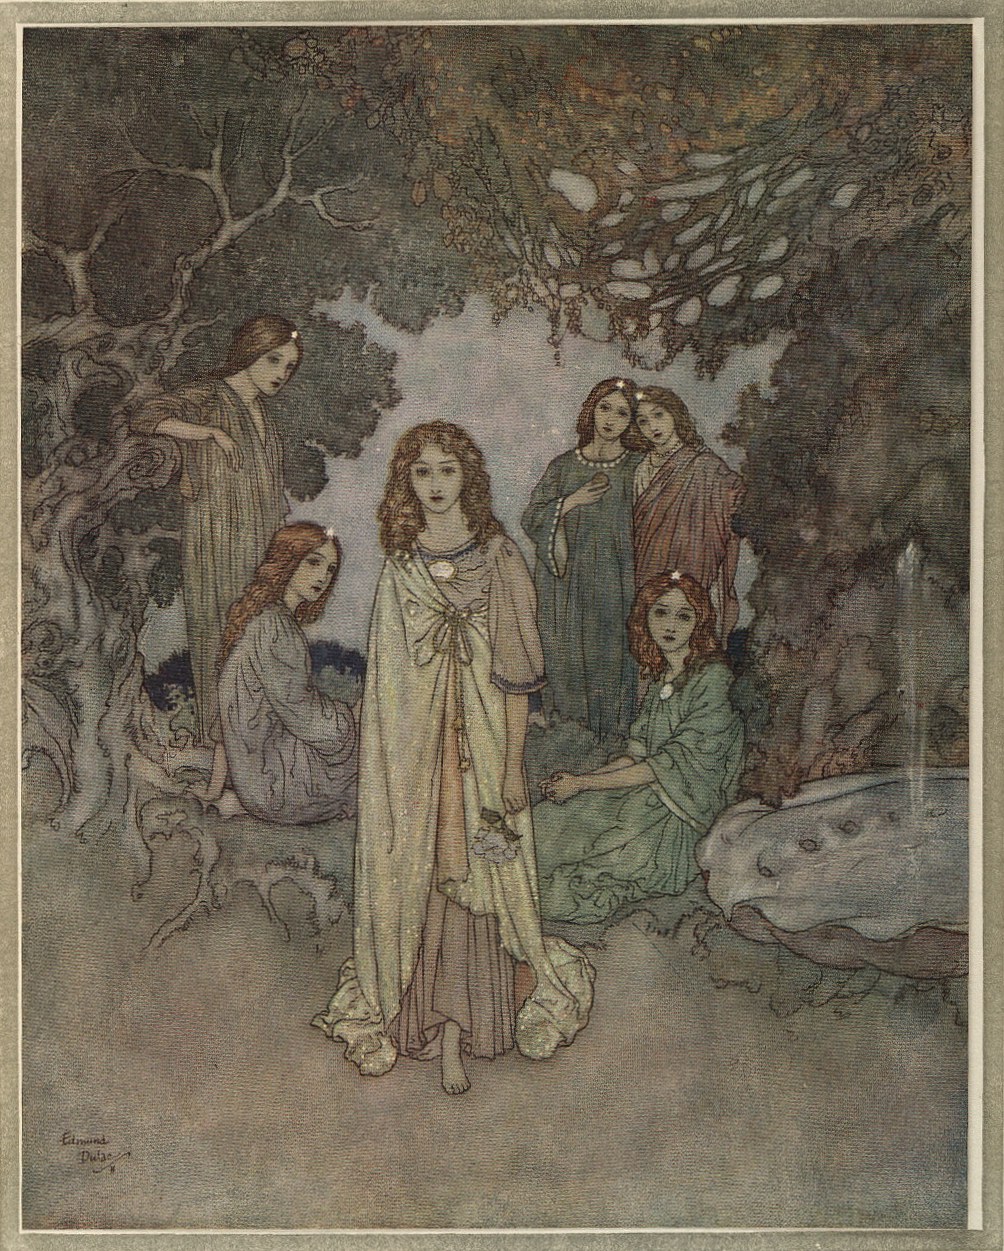 Edmund Dulac, ilustracja do Baśni Hansa Christiana Andersena, Stories from Hans Andersen, London 1911, licencja PD, źródło: Library od Congress